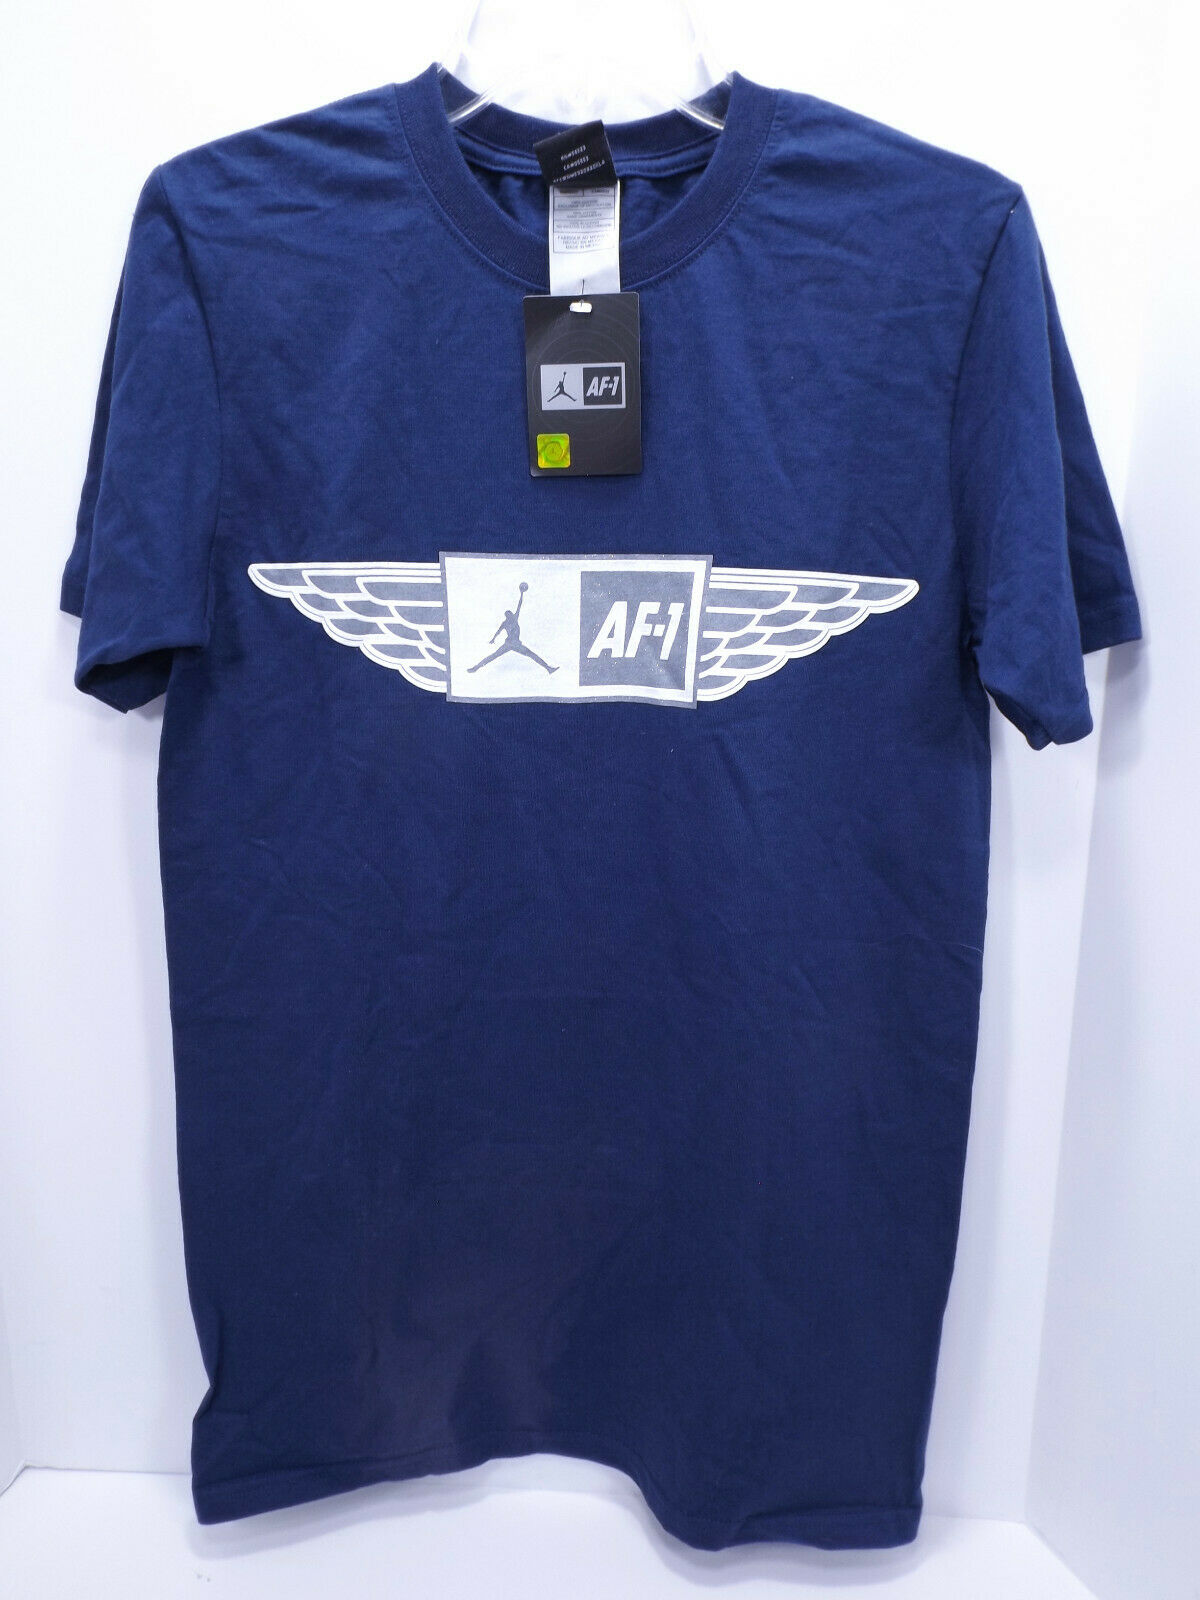 Jordan Mens Air Force 1 T-Shirt